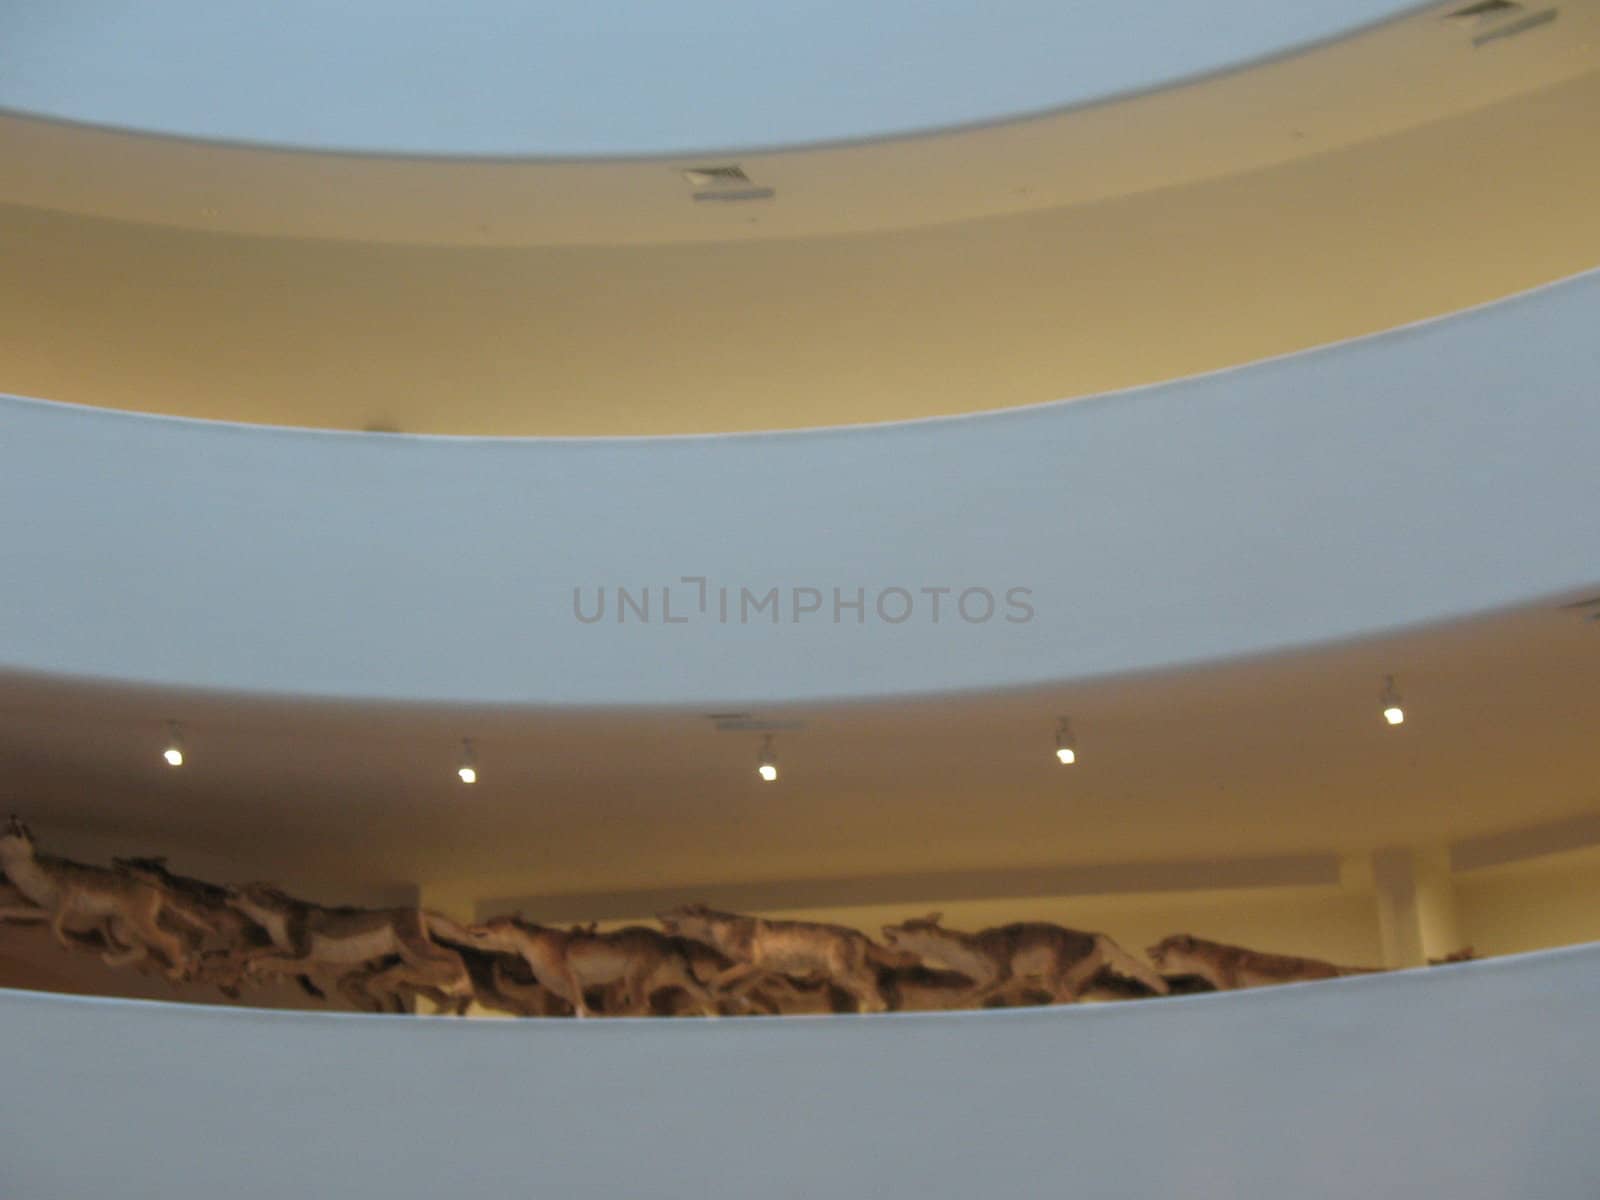 Art Display at the Guggenheim New York